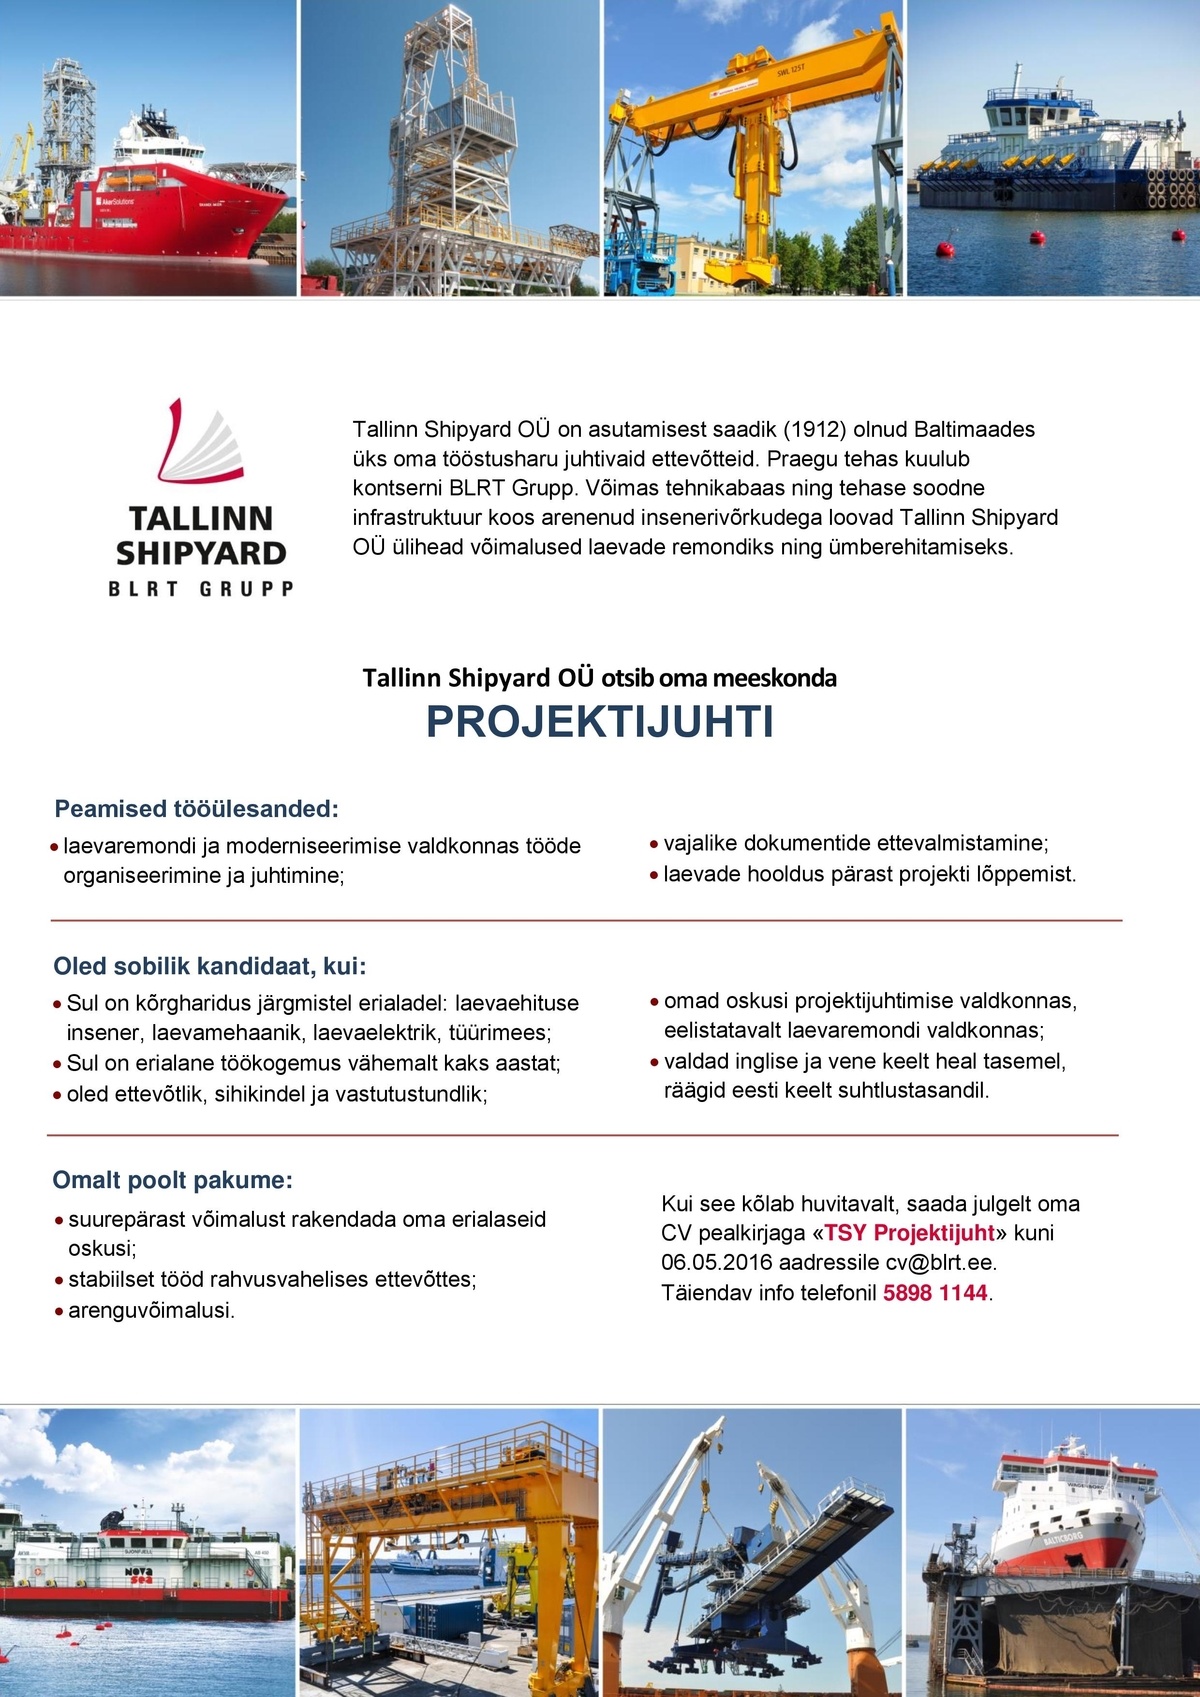 Tallinn Shipyard OÜ Projektijuht (laevaremont)